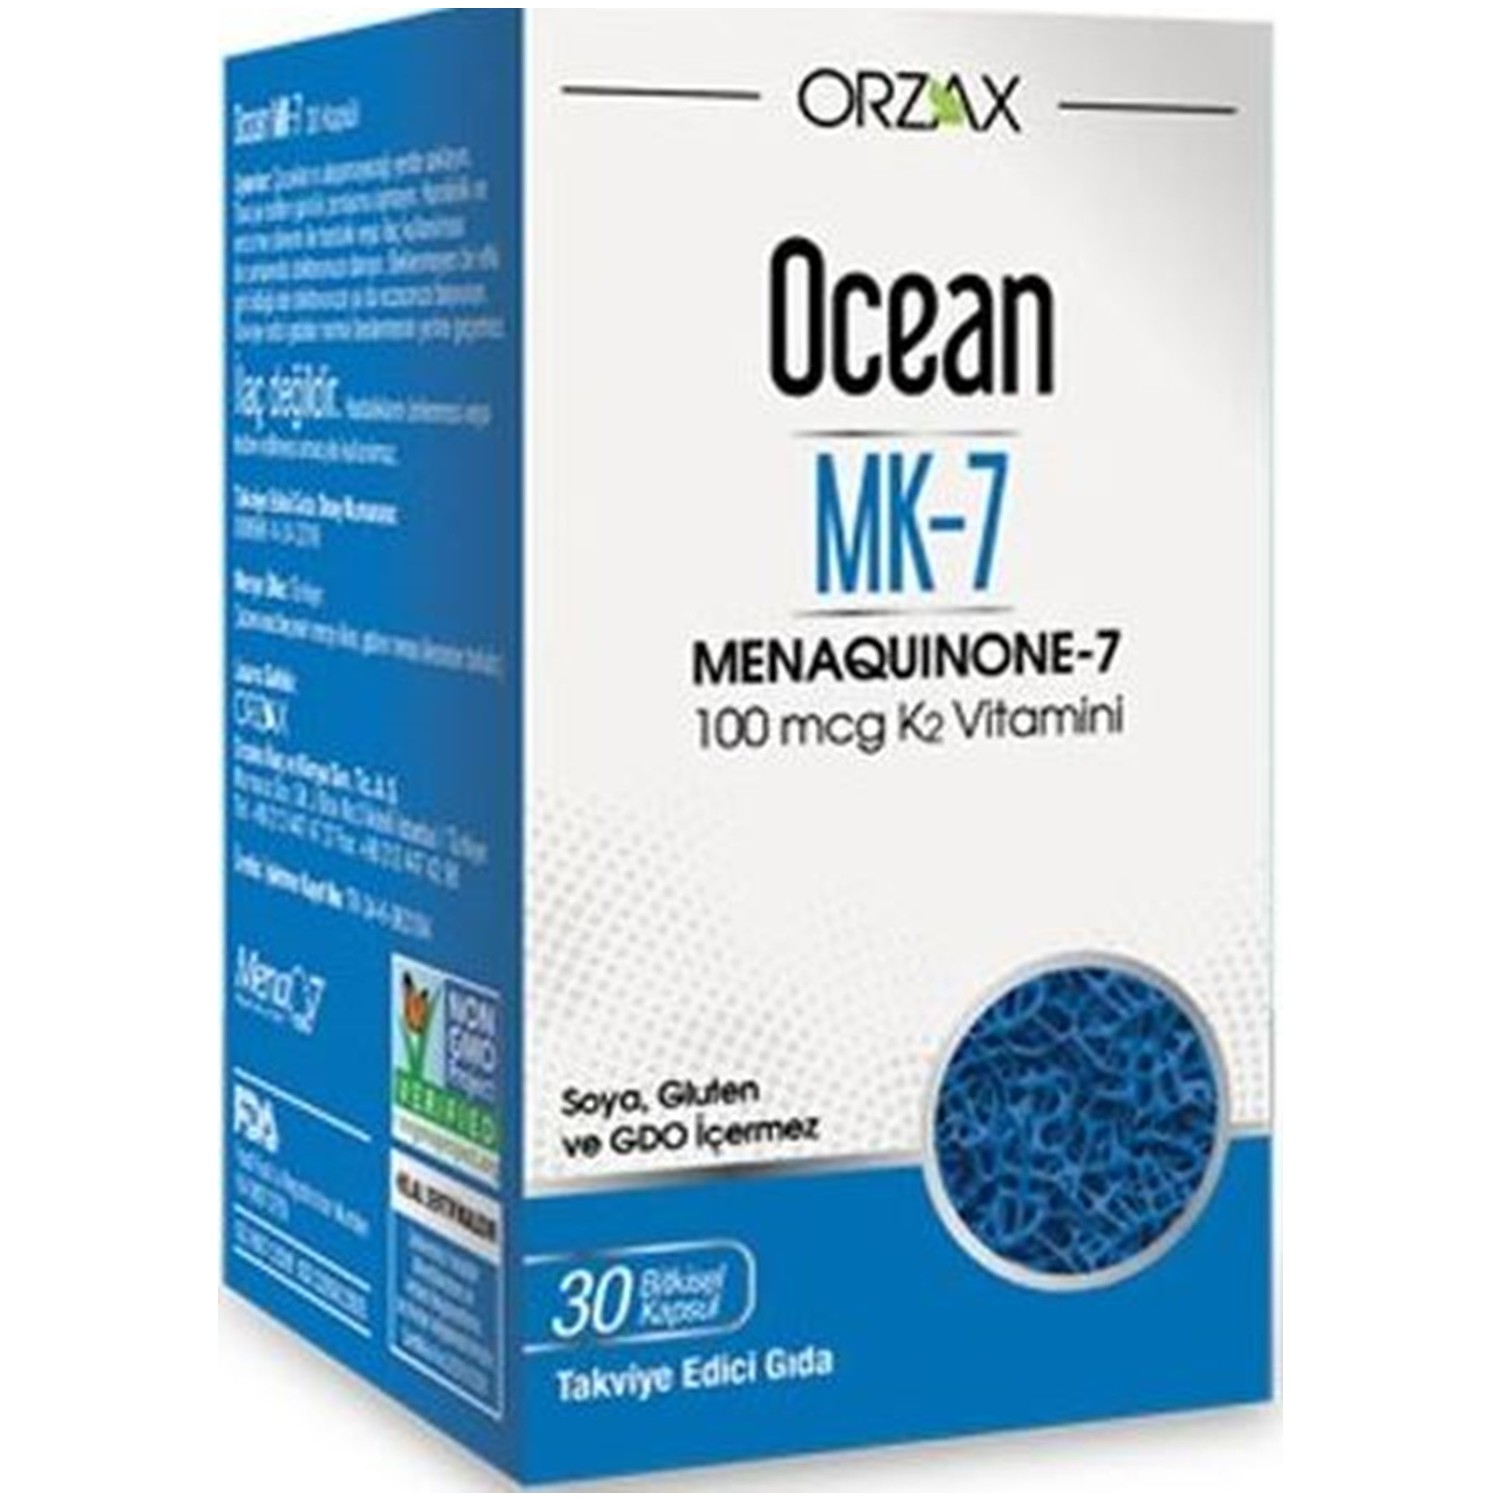 Пищевая добавка Orzax Ocean Mk-7 Vitamin К2 100 мкг, 30 капсул самая активная форма витамина k2 mk 7 180 мкг 30 мягких таблеток jarrow formulas